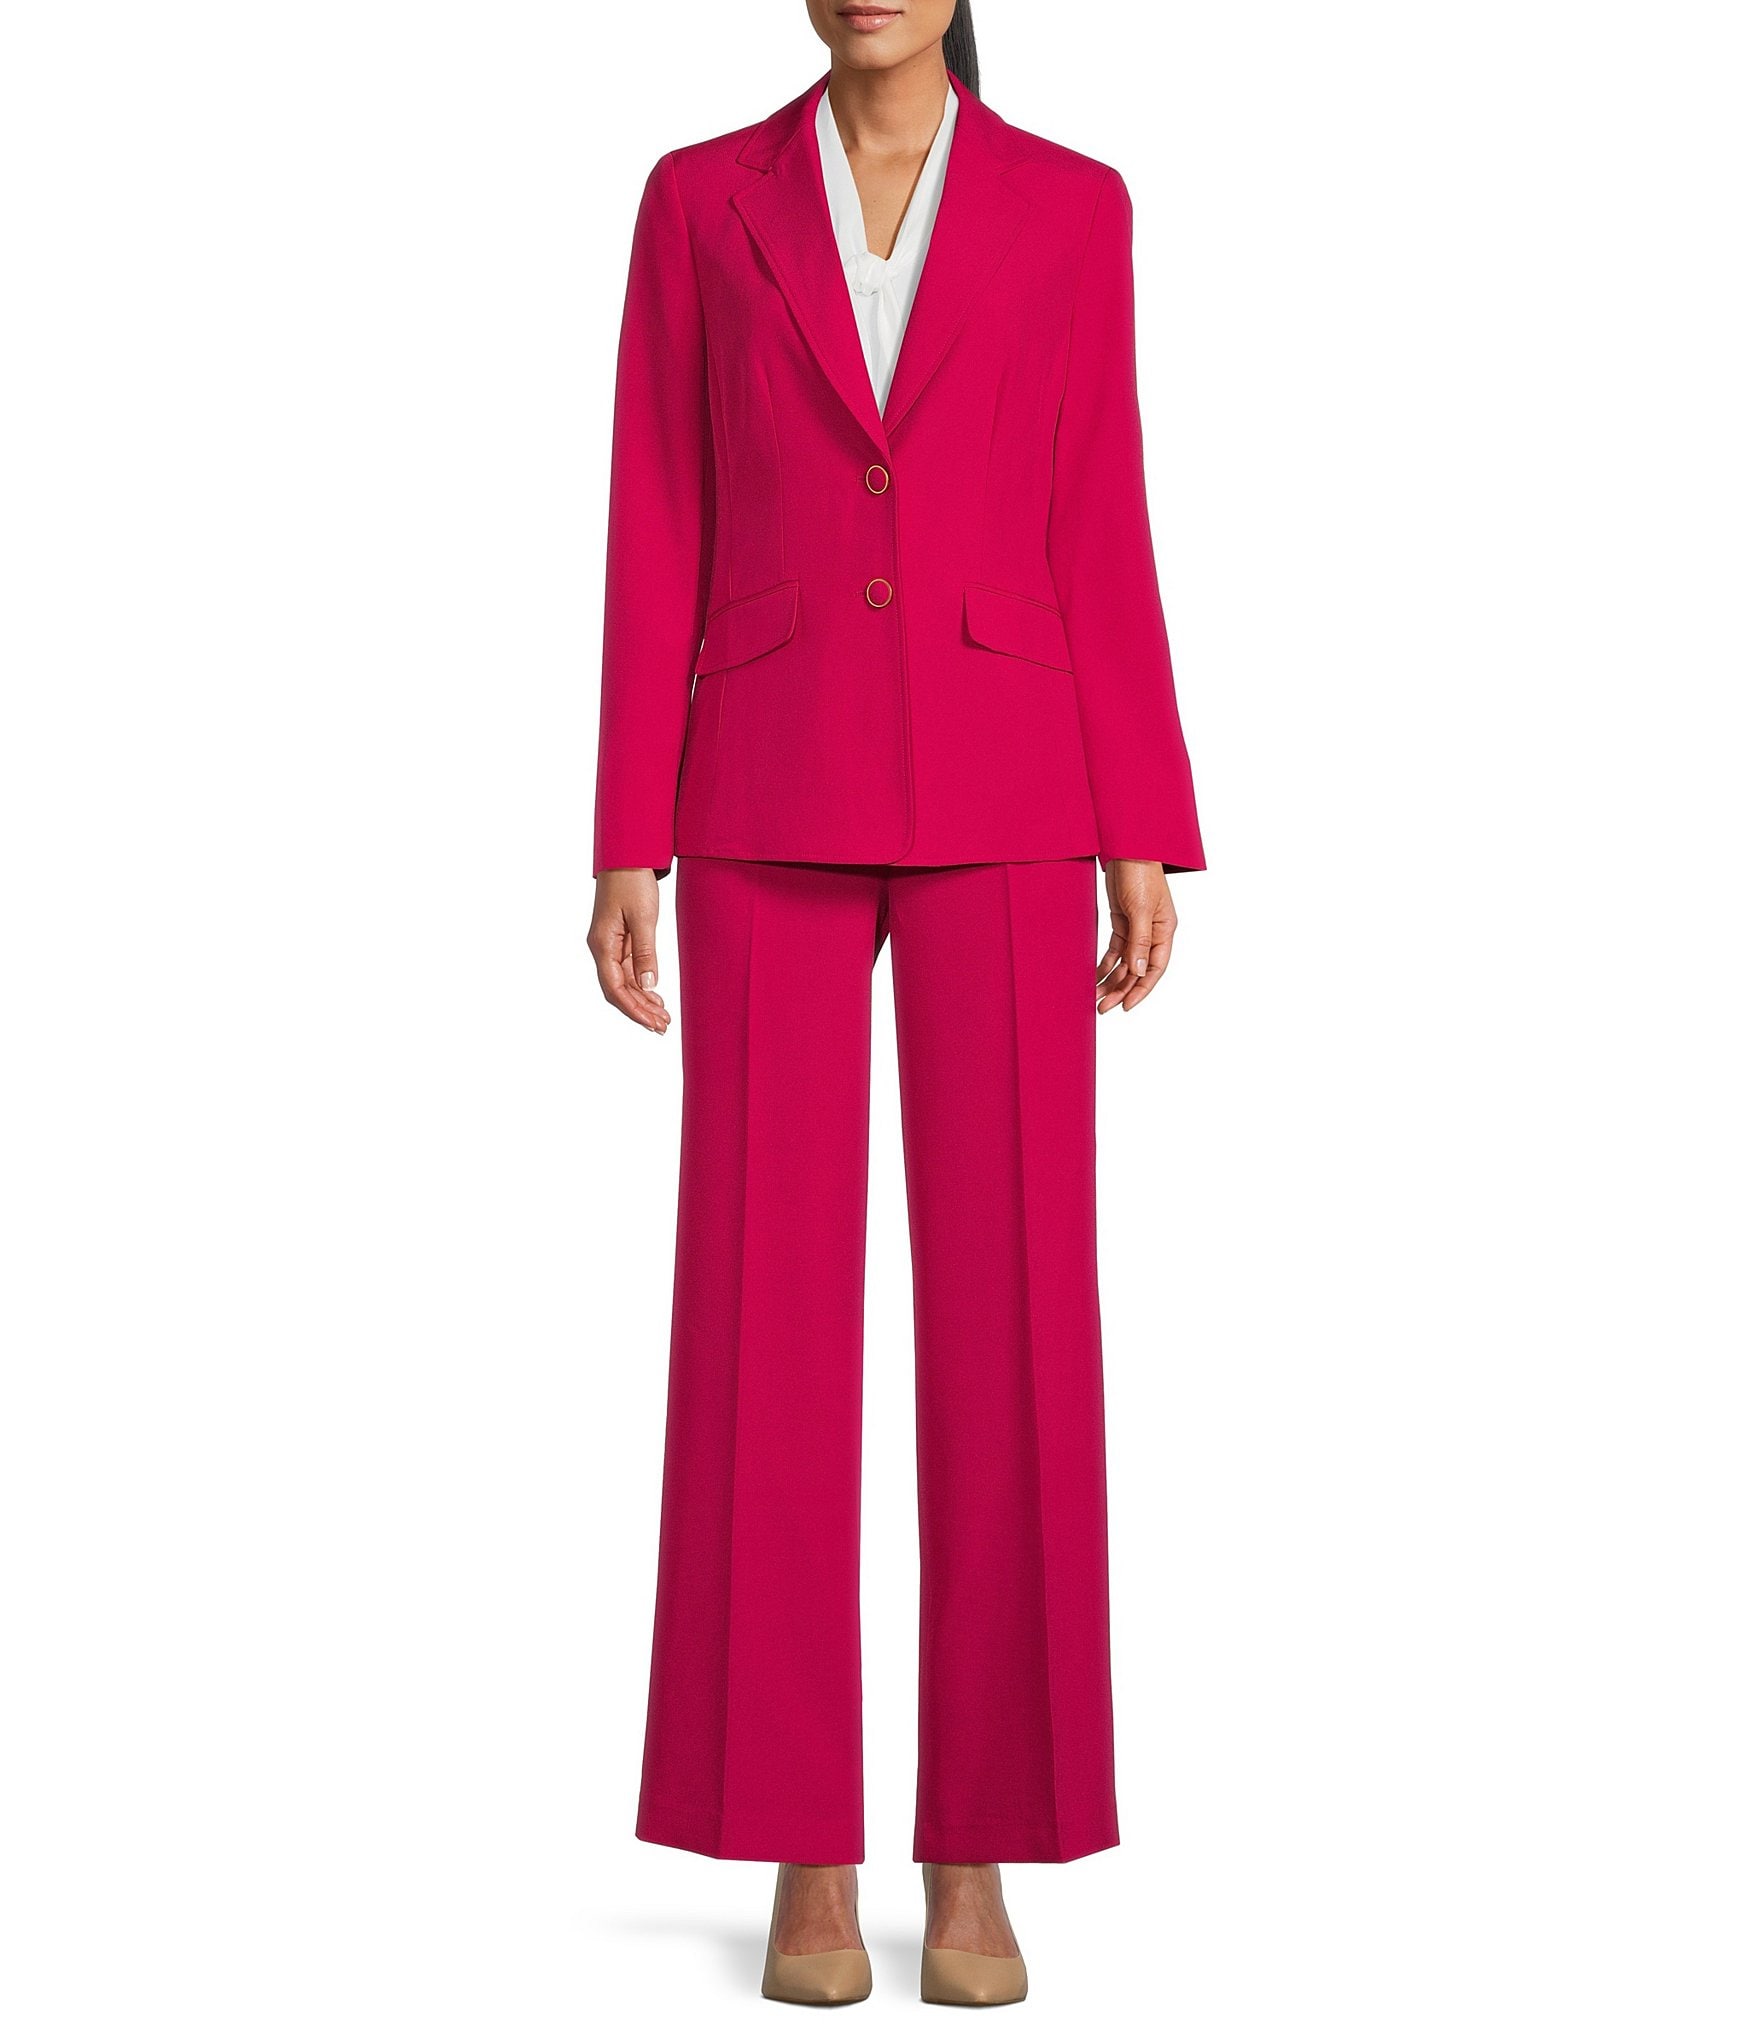 women's pant suits: Women's Workwear, Suits & Office Attire